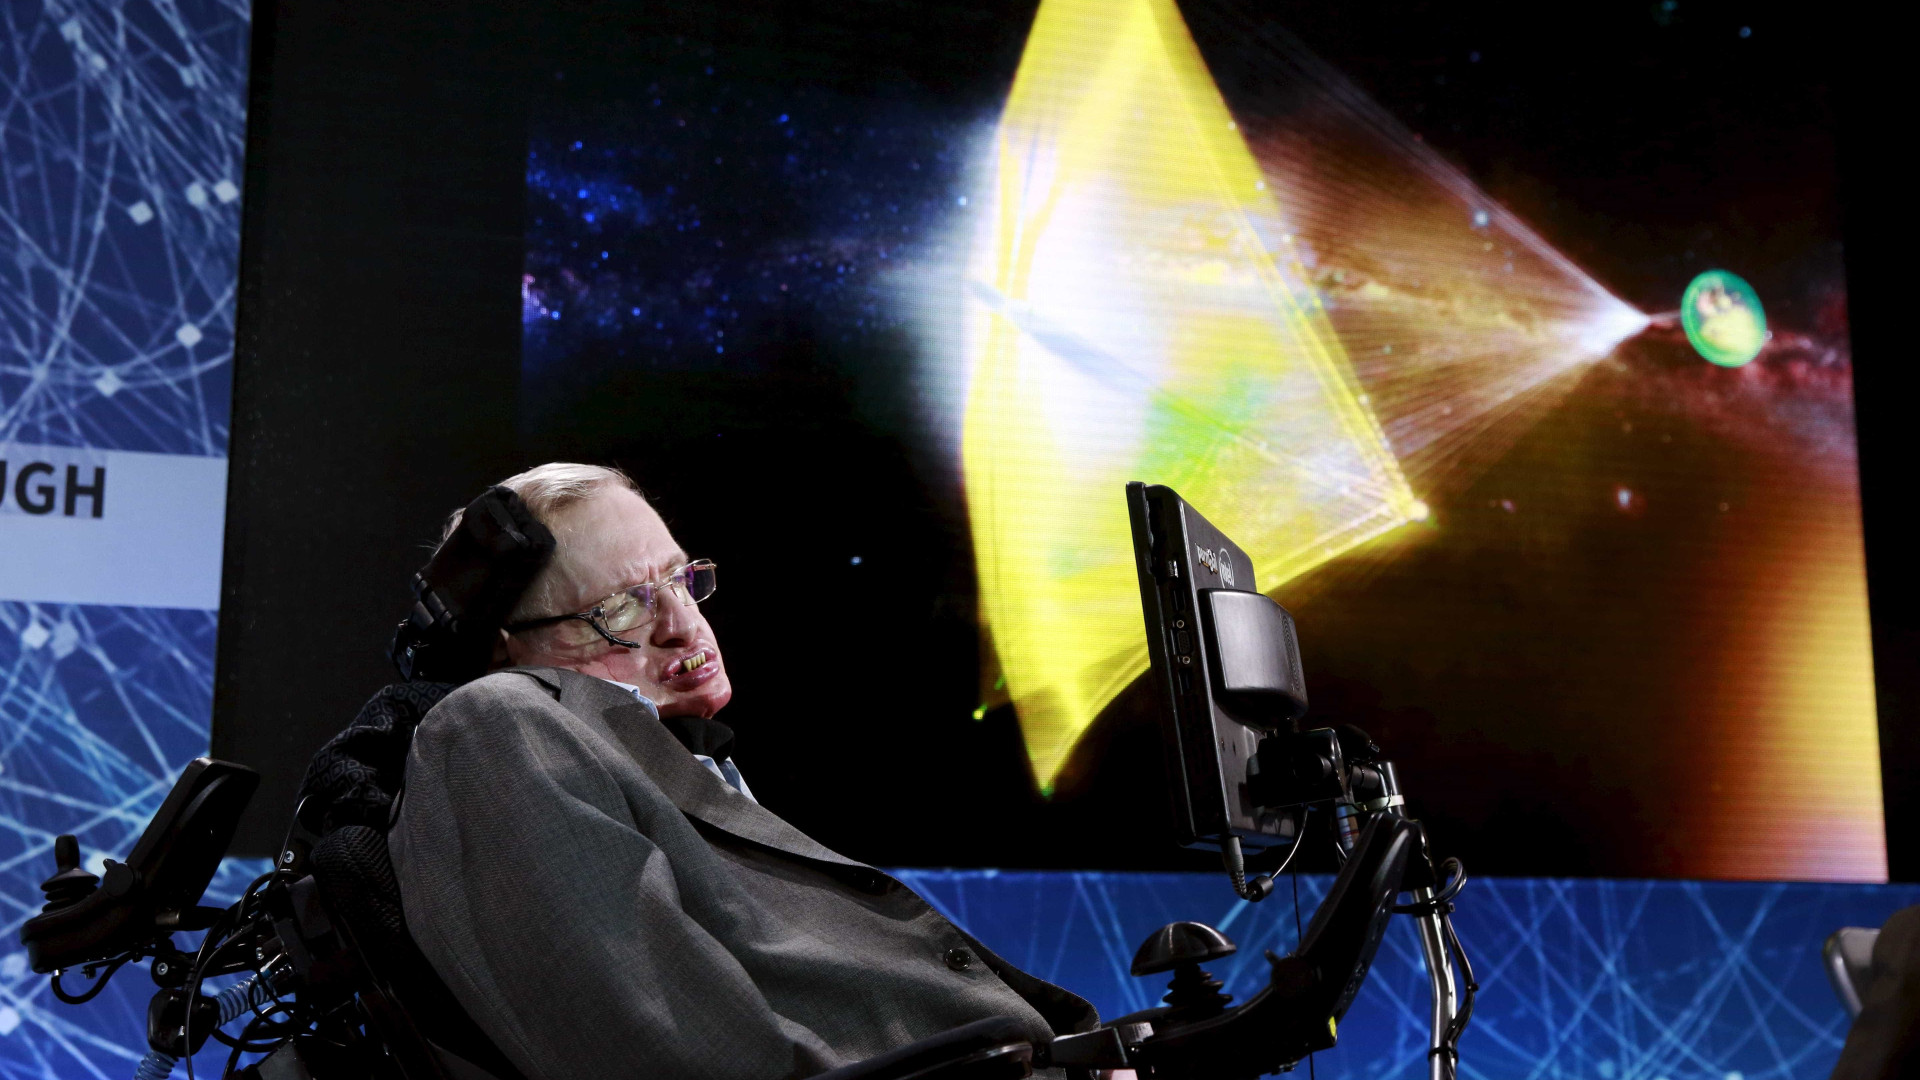 Seres humanos devem deixar planeta 
terra em cem anos, diz Hawking